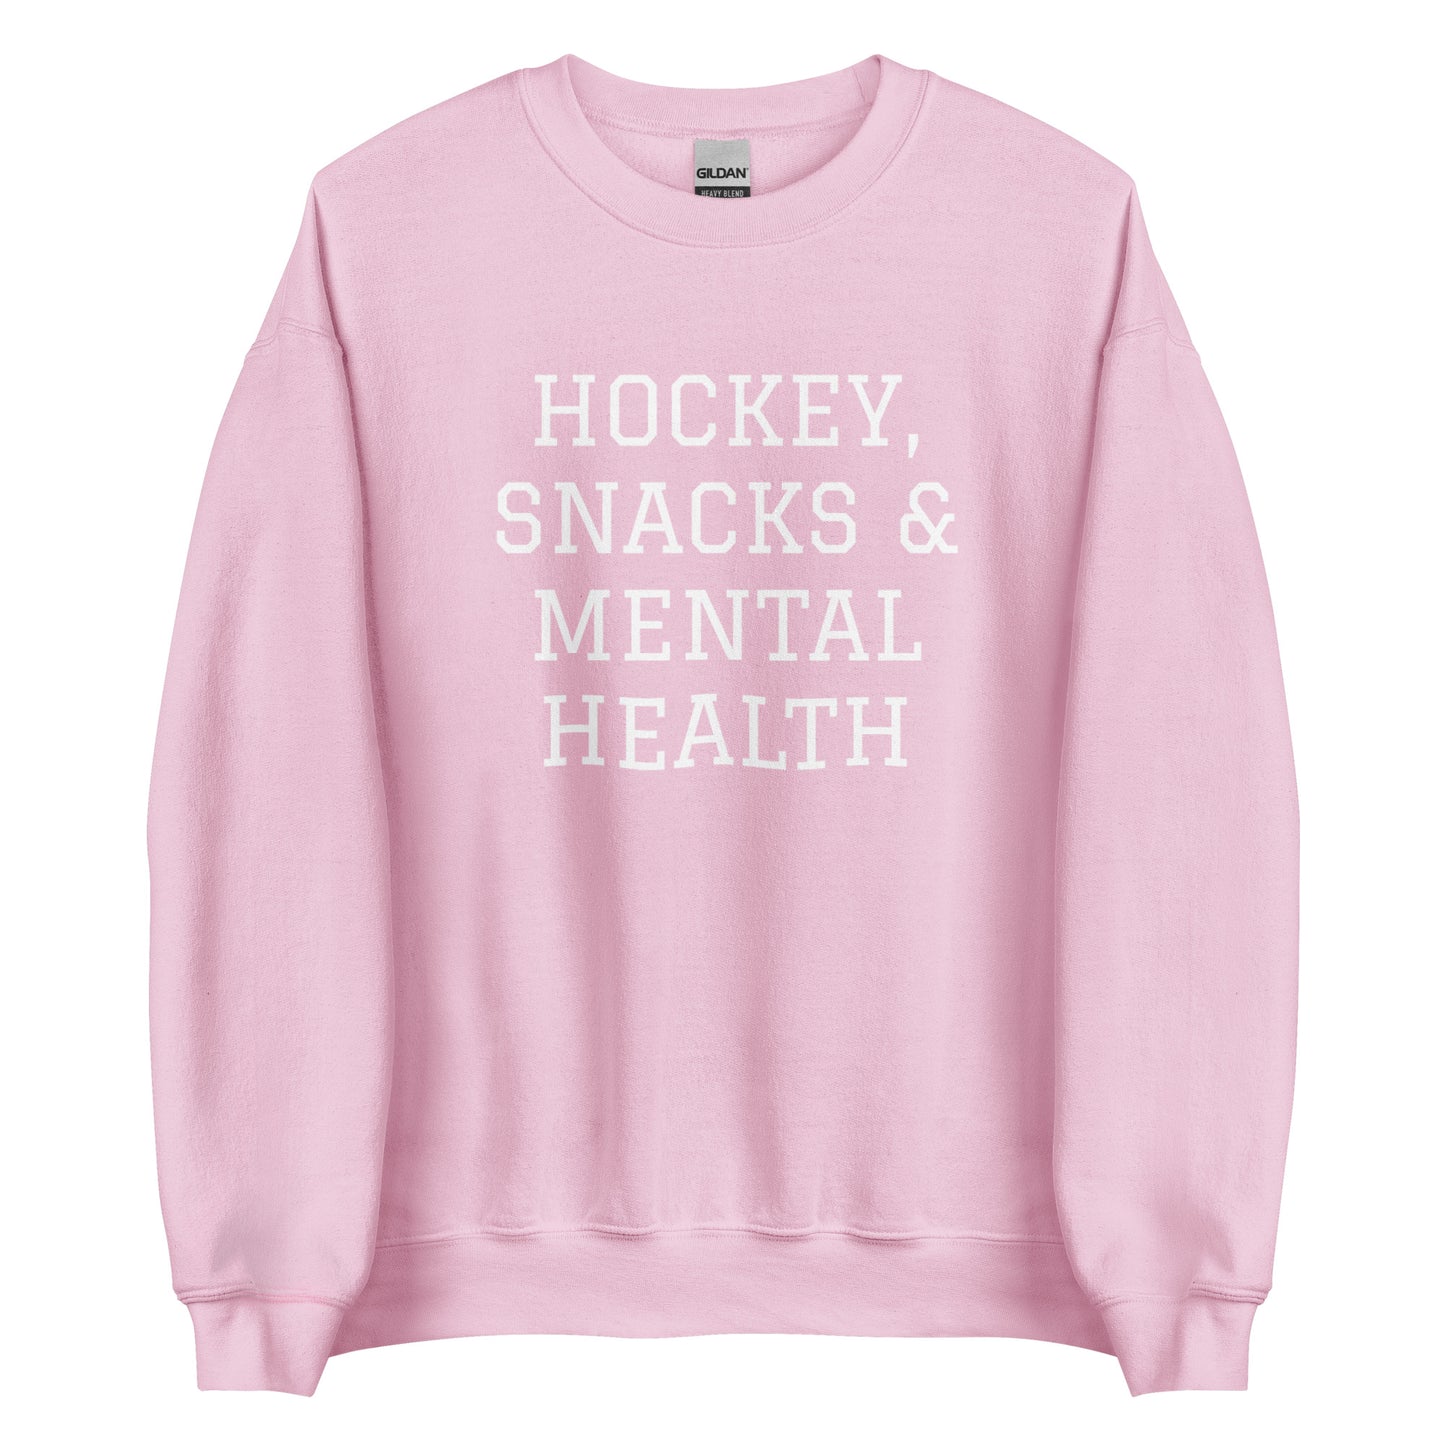 Hockey, Snacks & Mental Health Sweatshirt